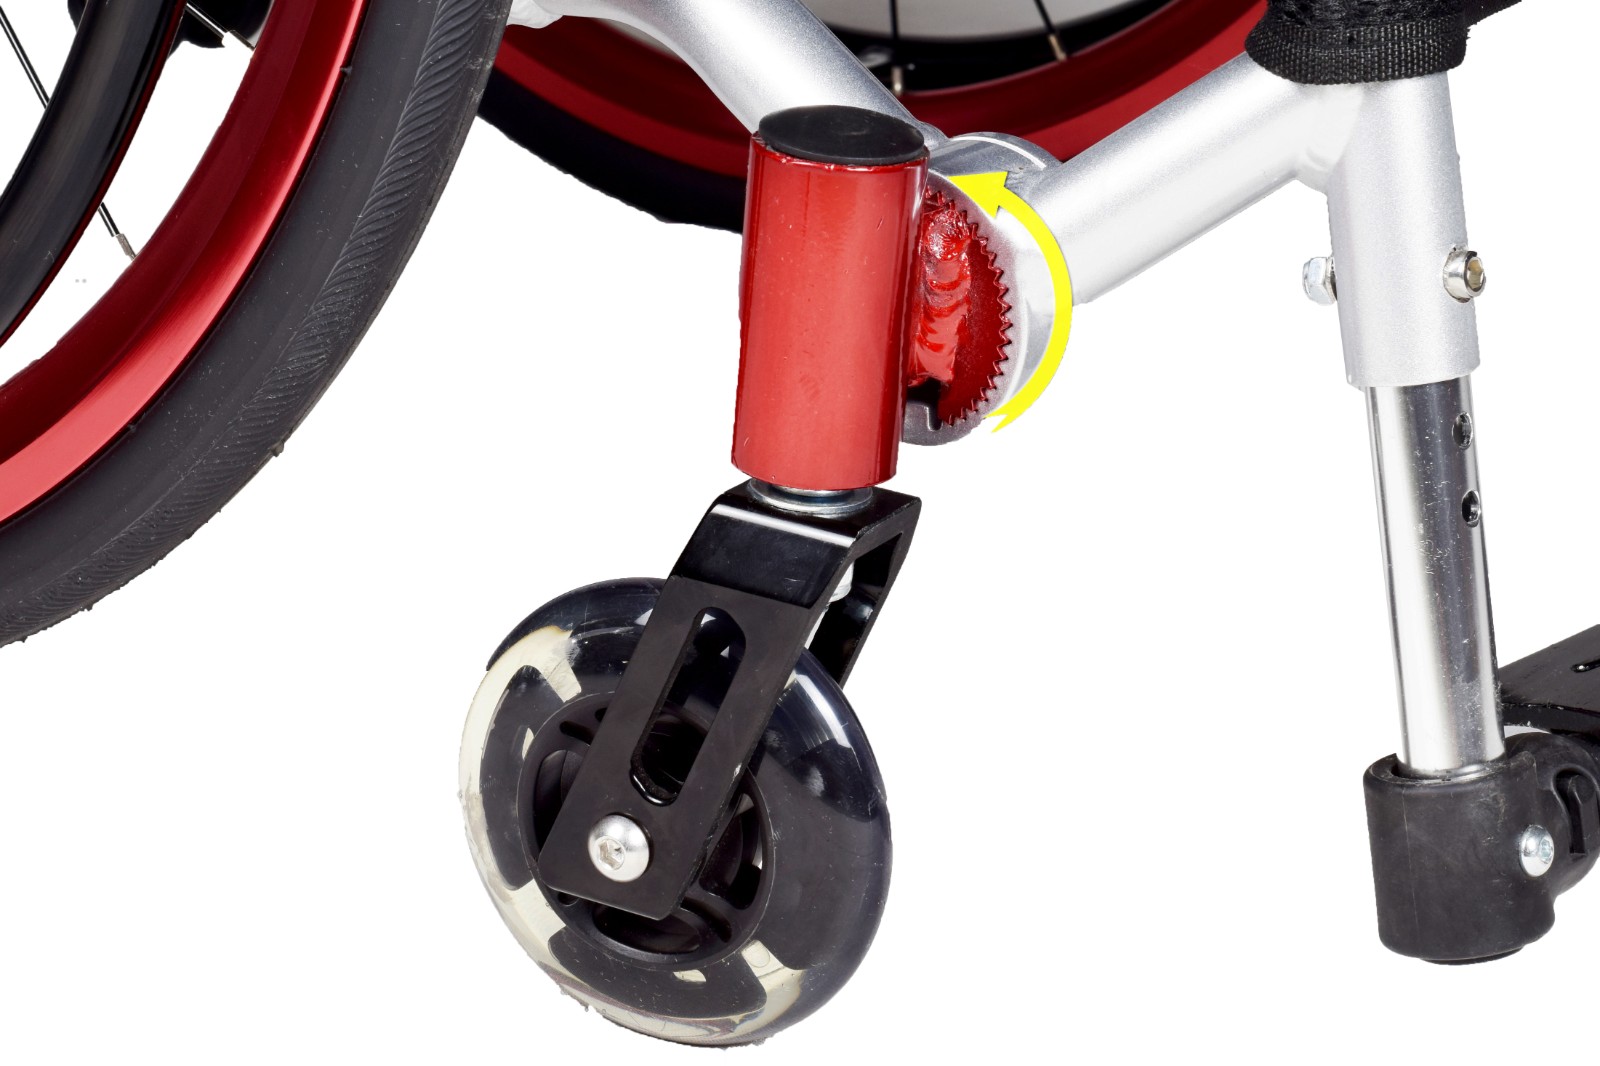 Leisure Type High Strength Sport Aluminum Manual Wheelchair